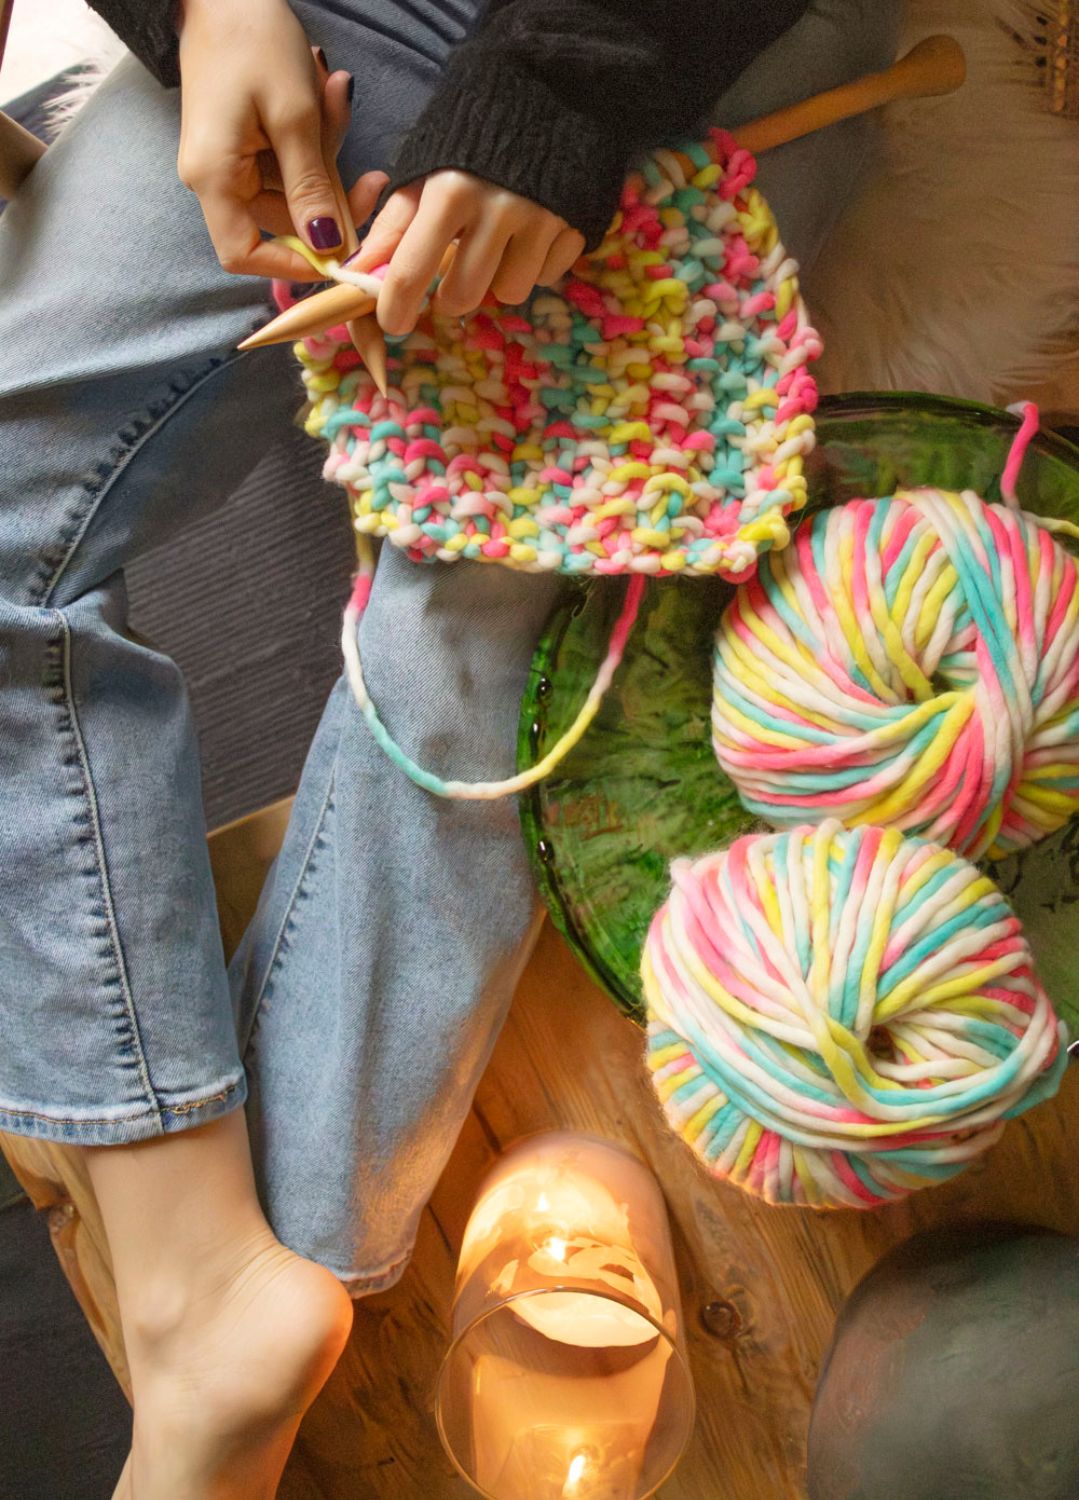 Learn the Knitting Basics